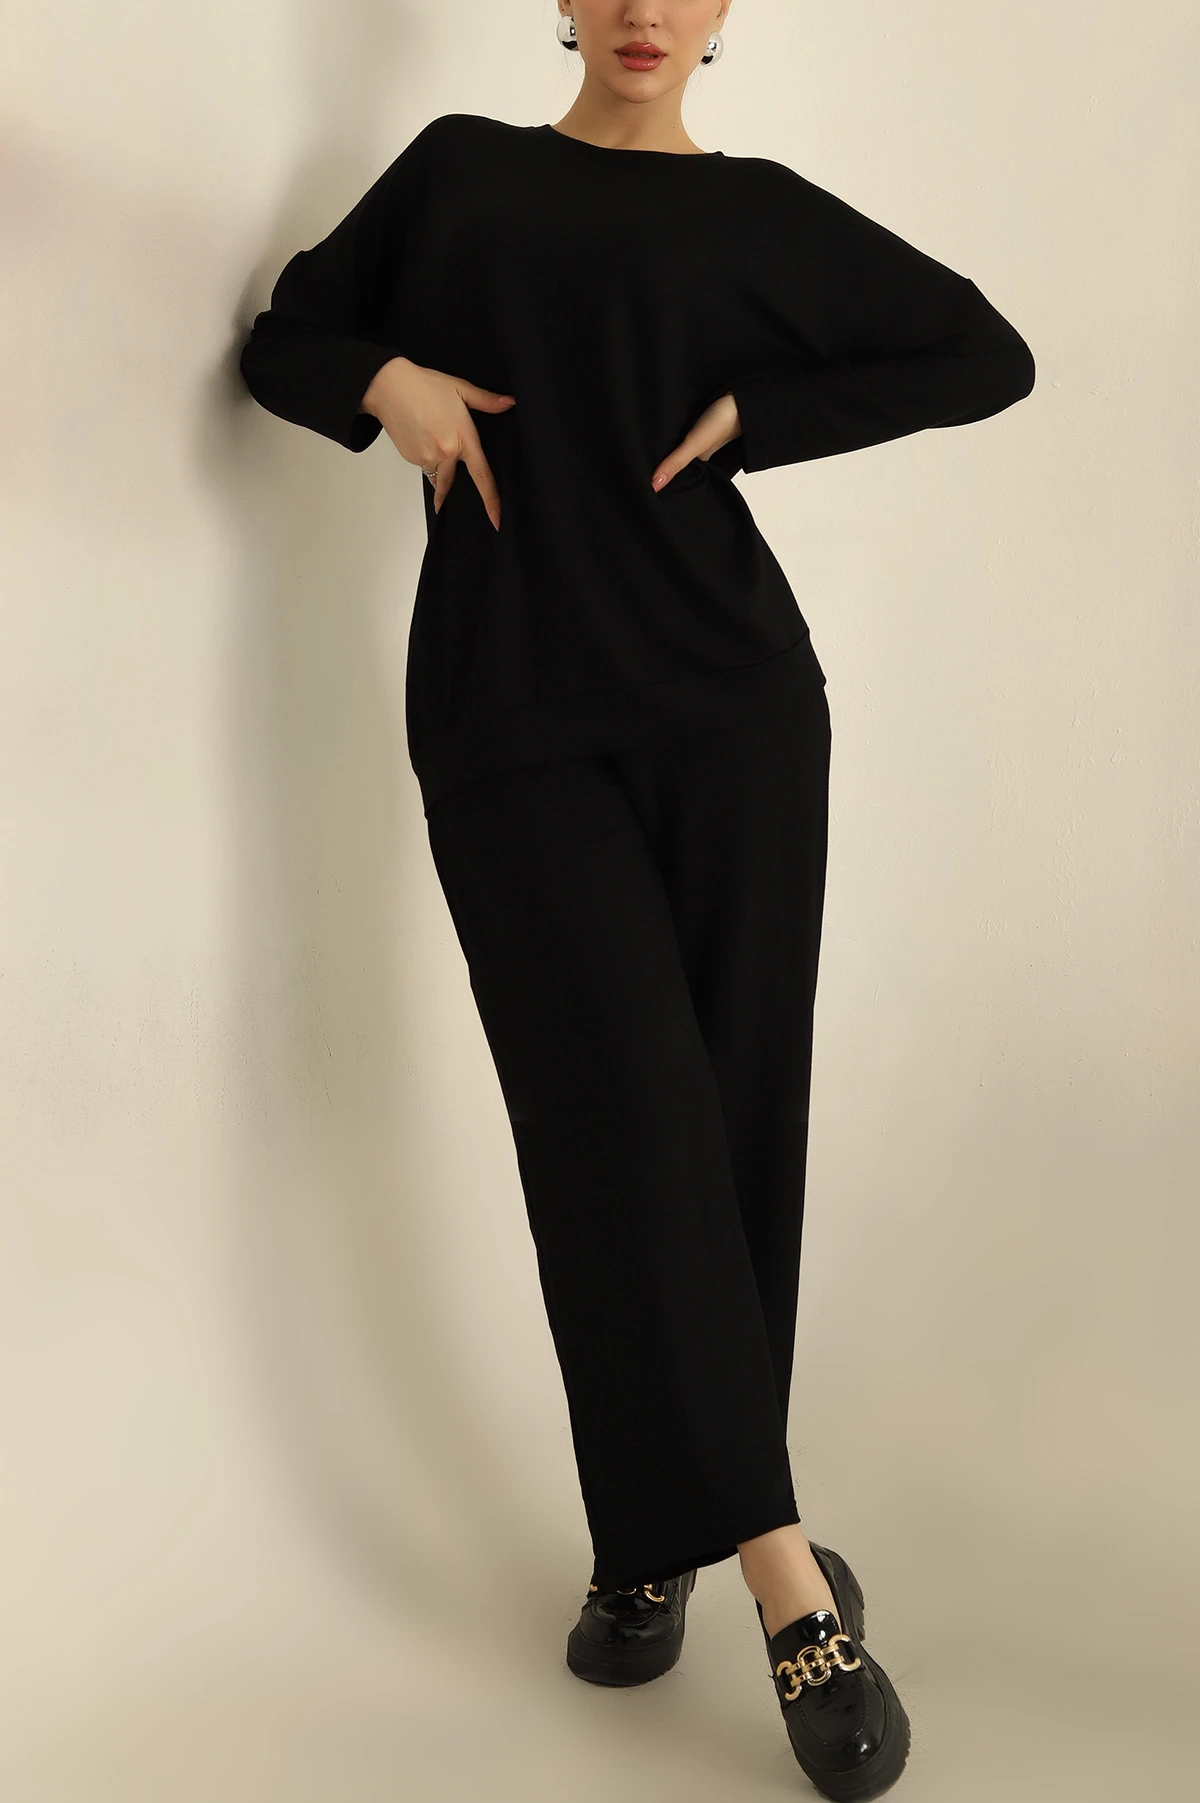 Siyah Modal Pantolonlu Bayan İkili Takım 255427